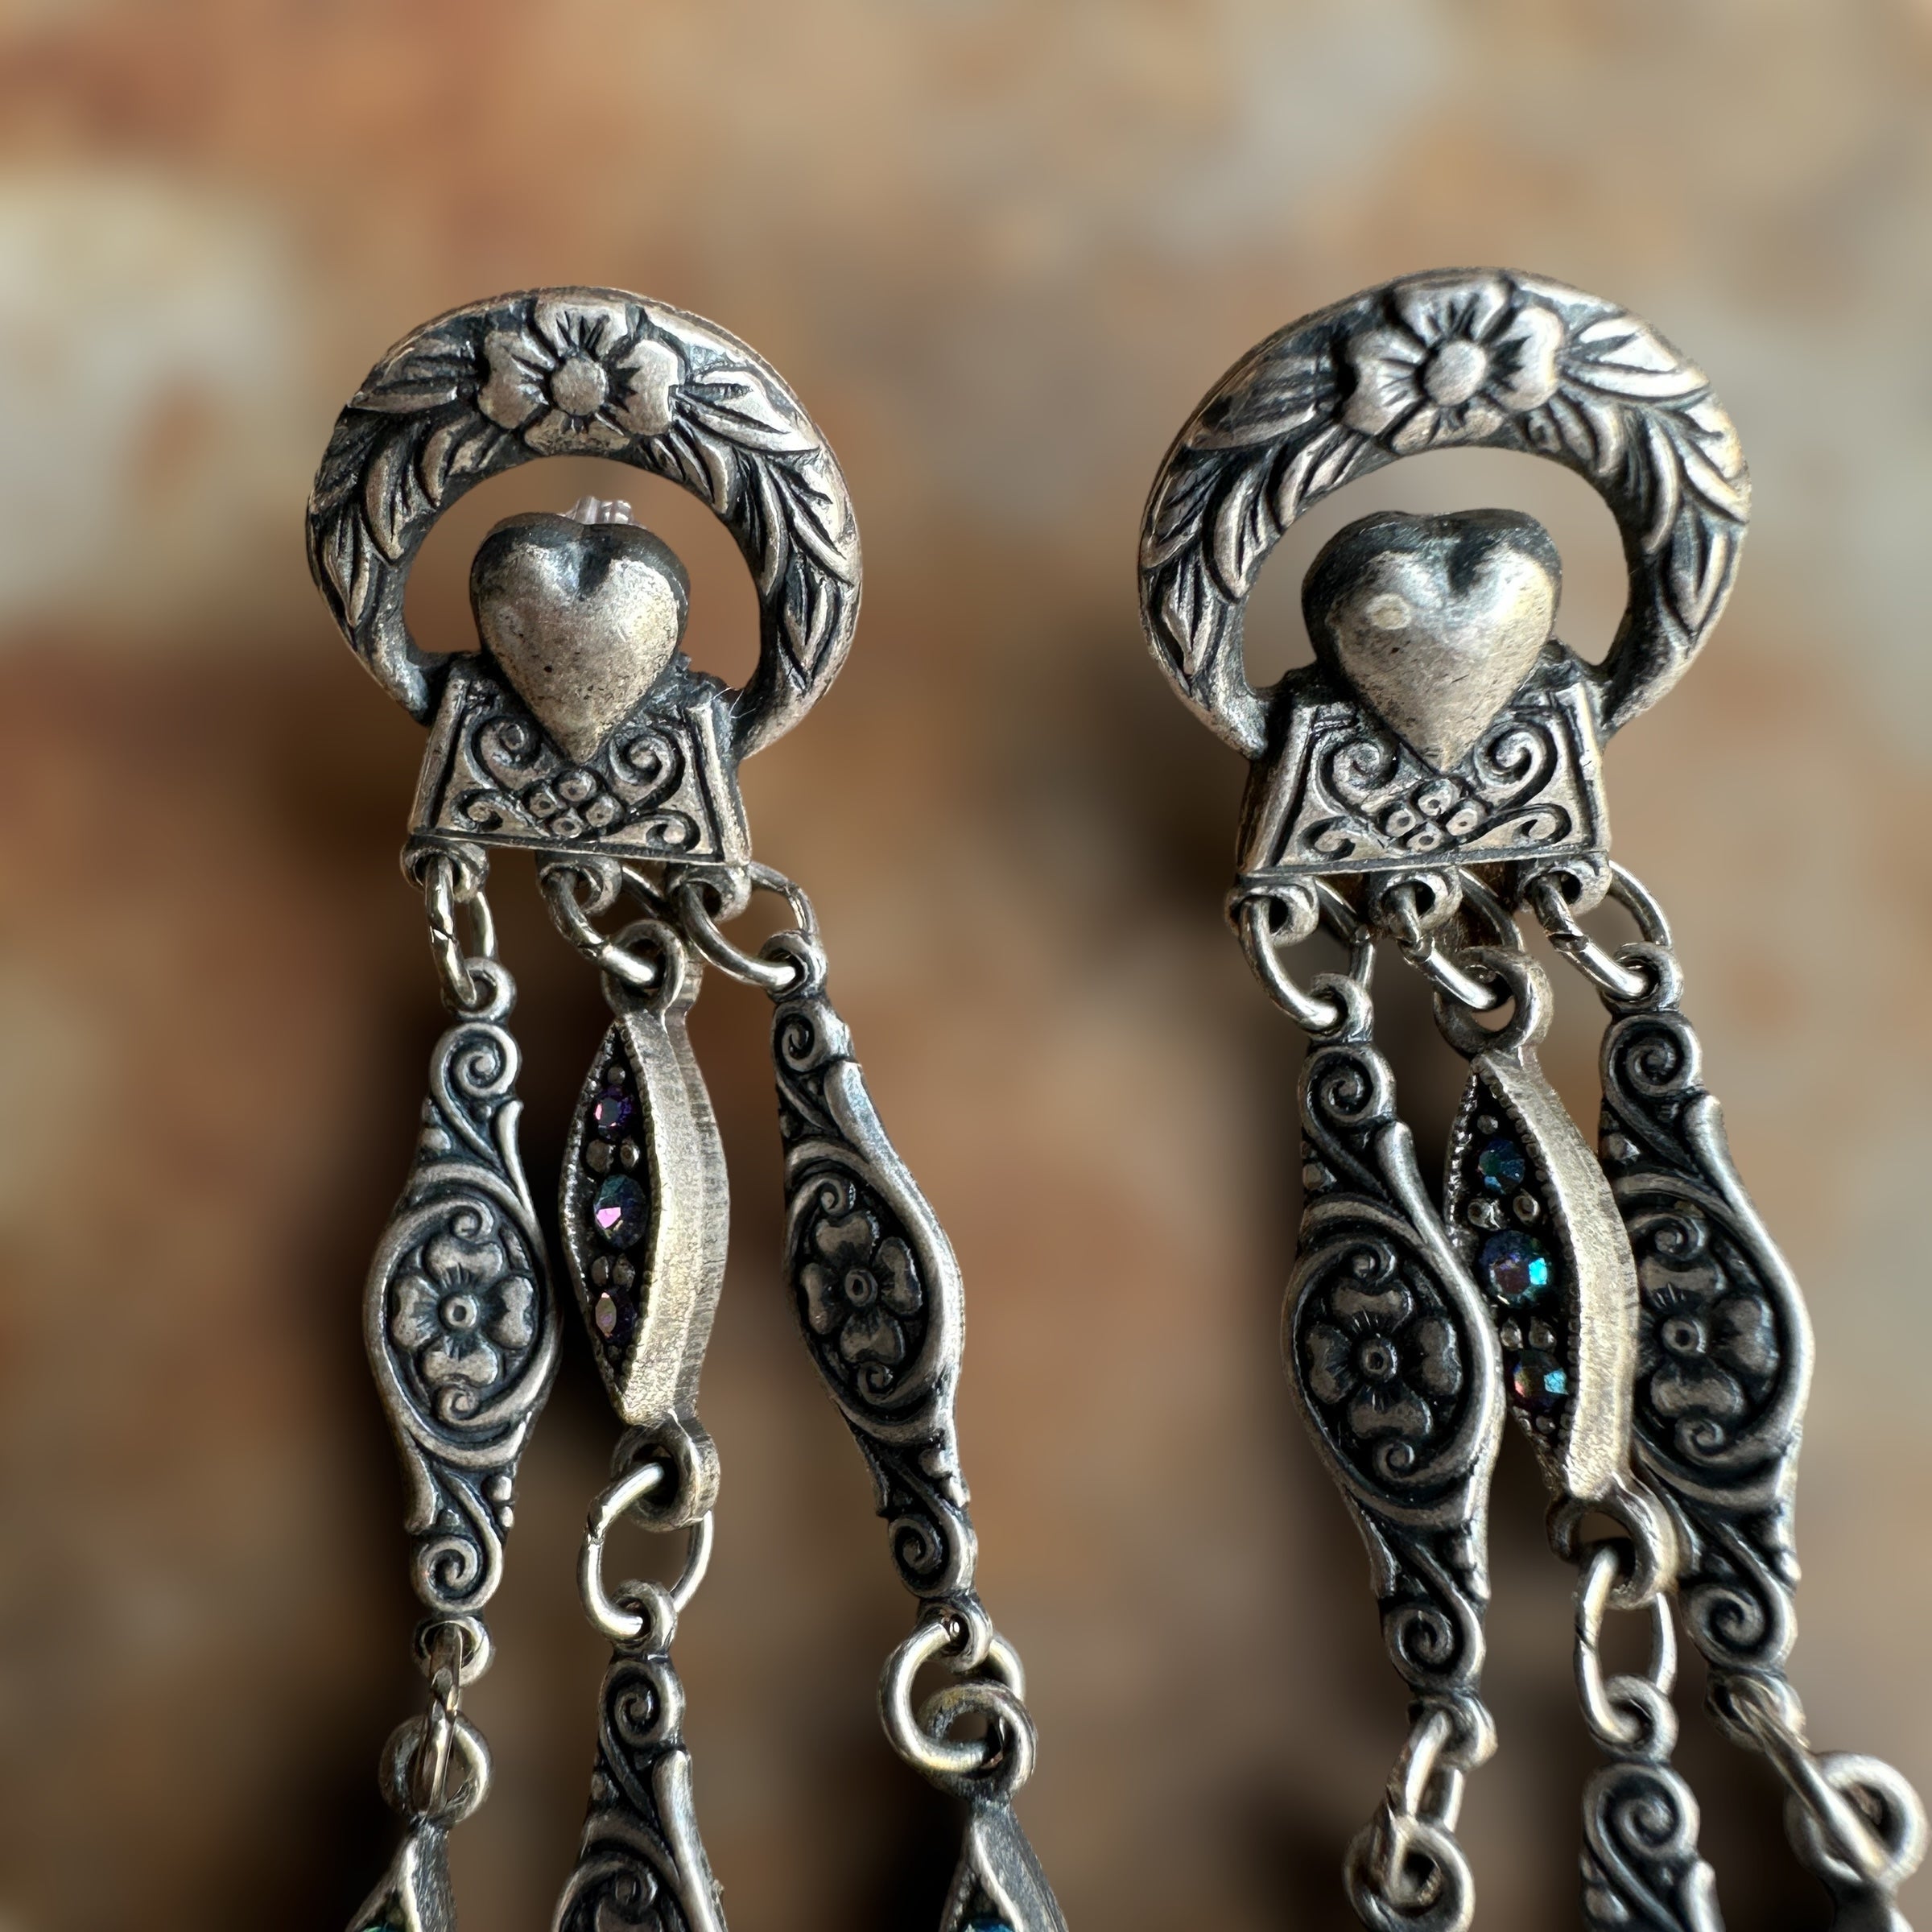 Super cute vintage silver-tone dangle earrings with faux pearl drop